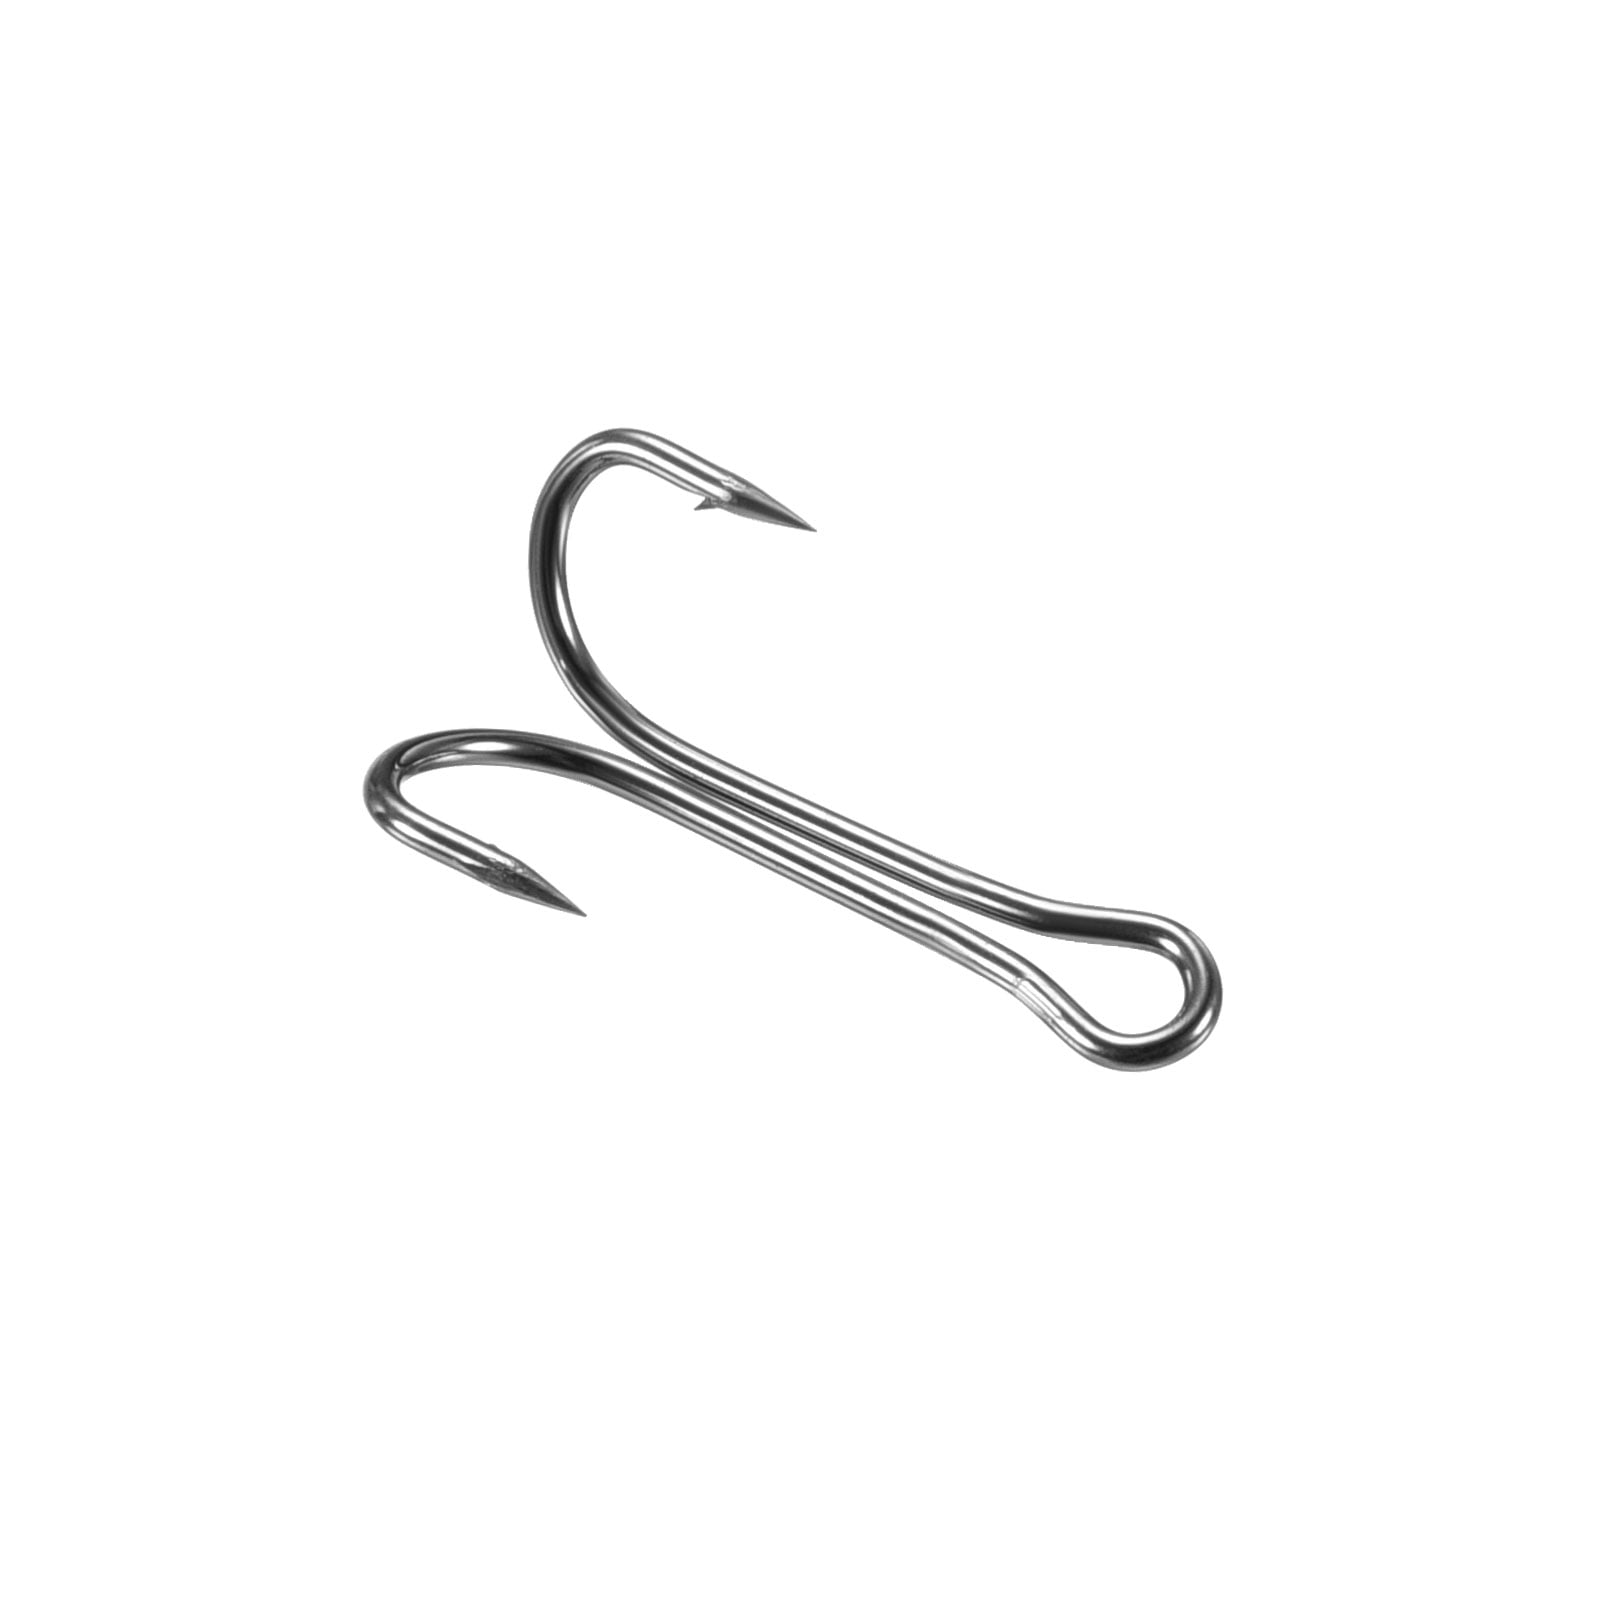 6# 0.79 Carbon Steel Double Fish Hooks Sharp Barbed Frog Hook